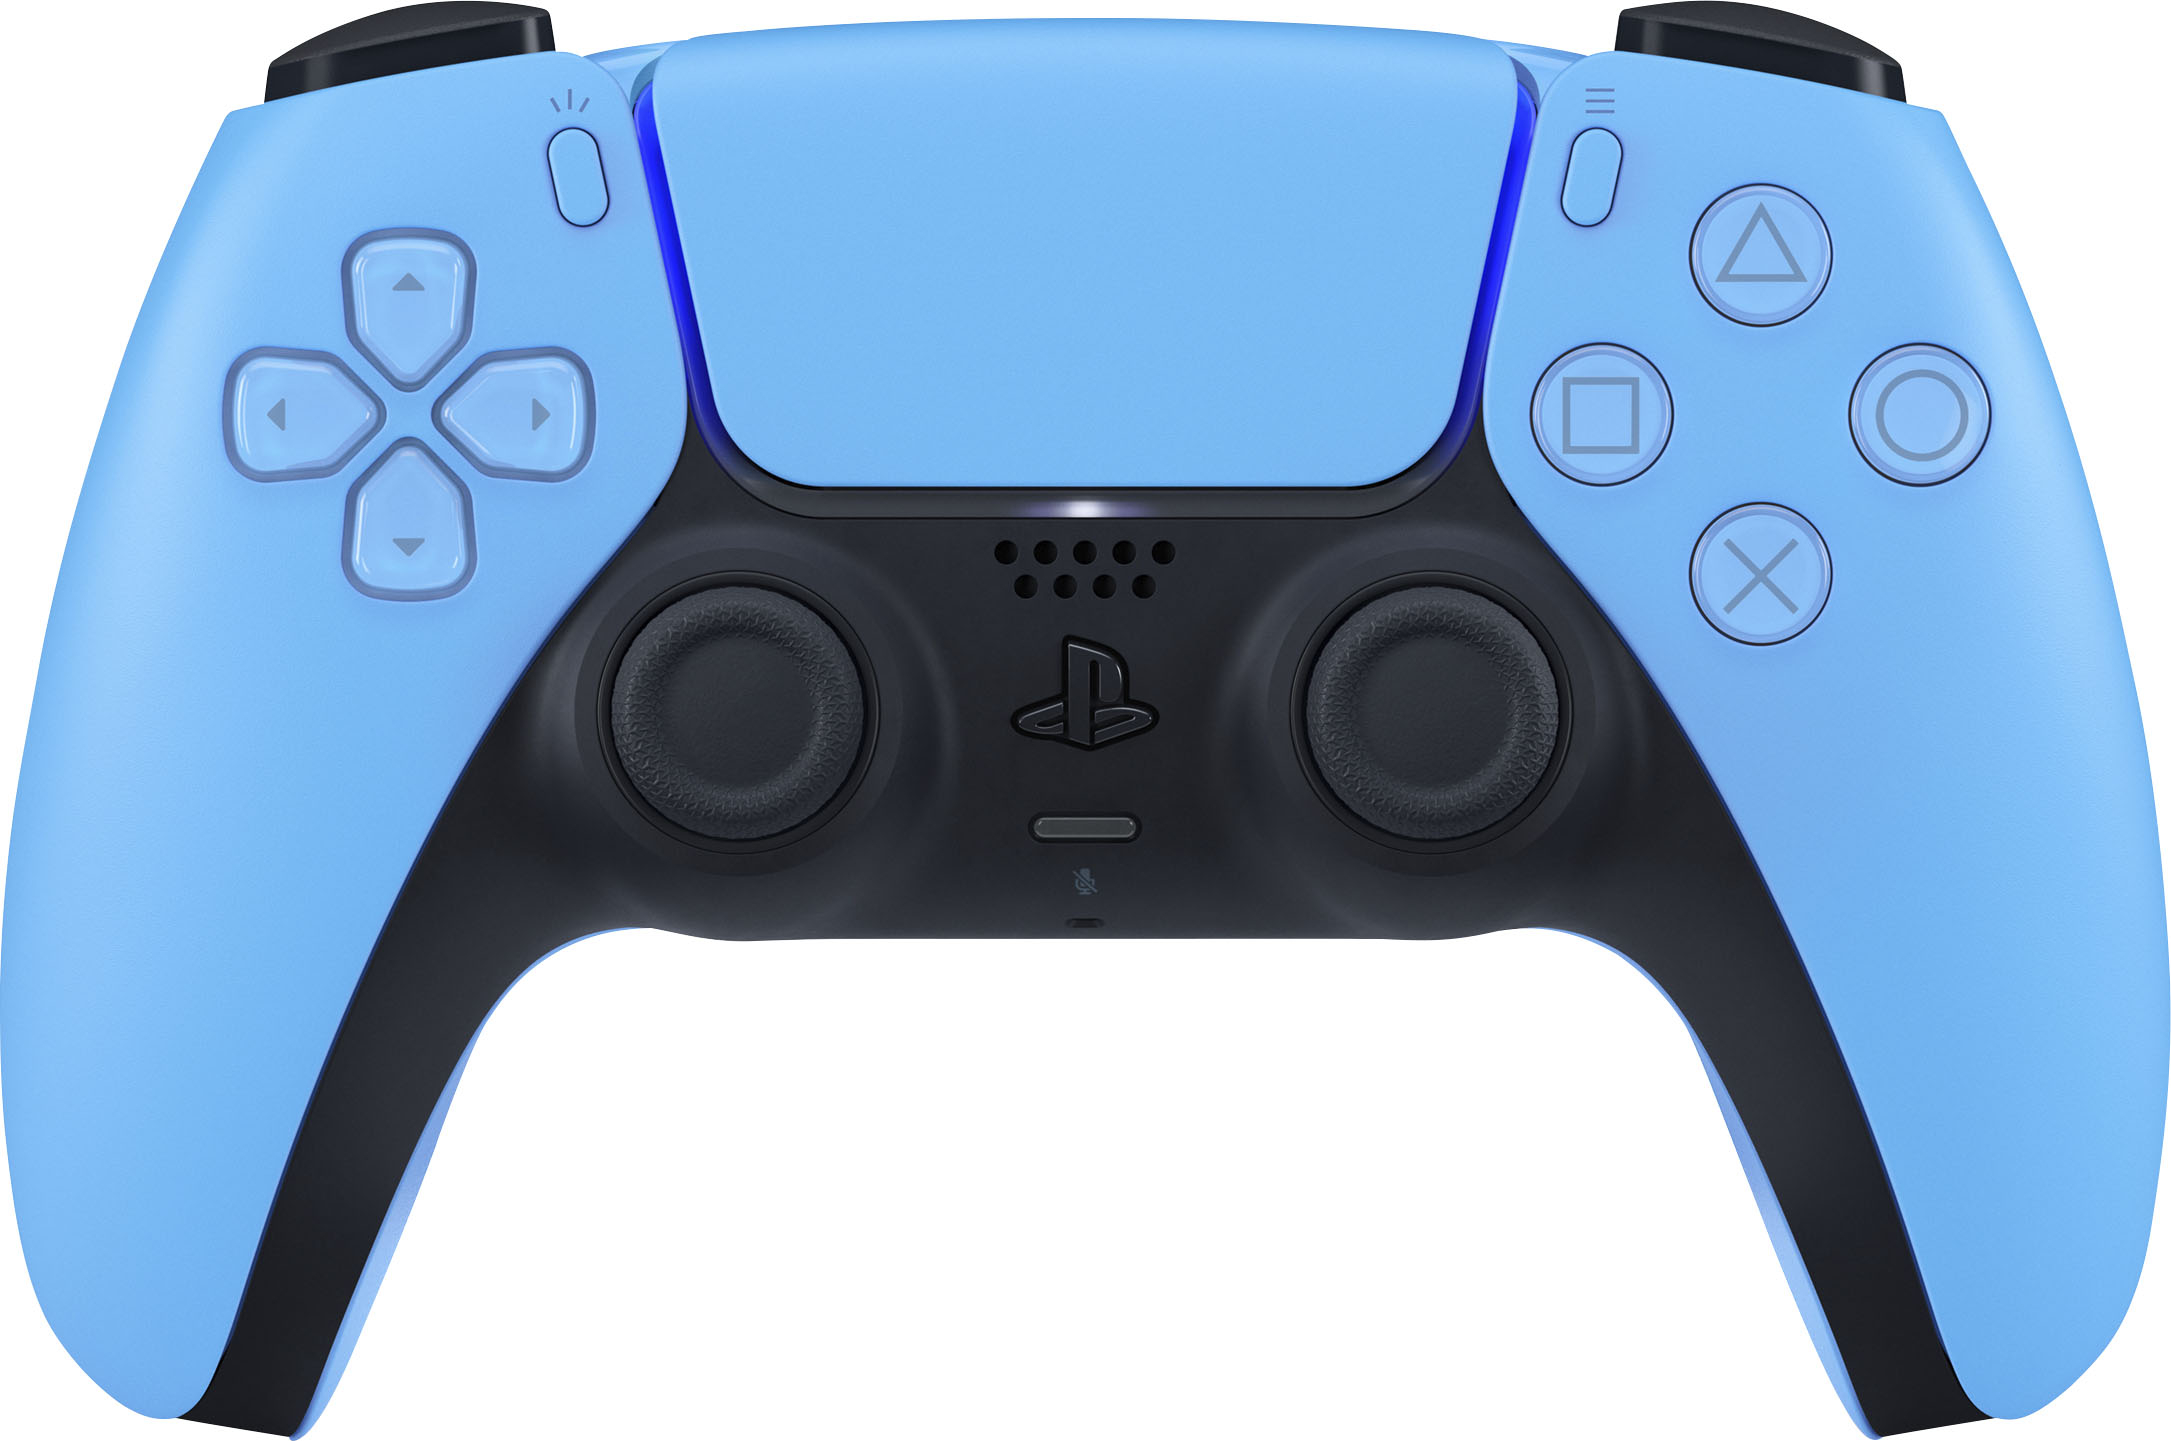 Controle DualSense Cobalt Blue - PS5 - Game Games - Loja de Games Online